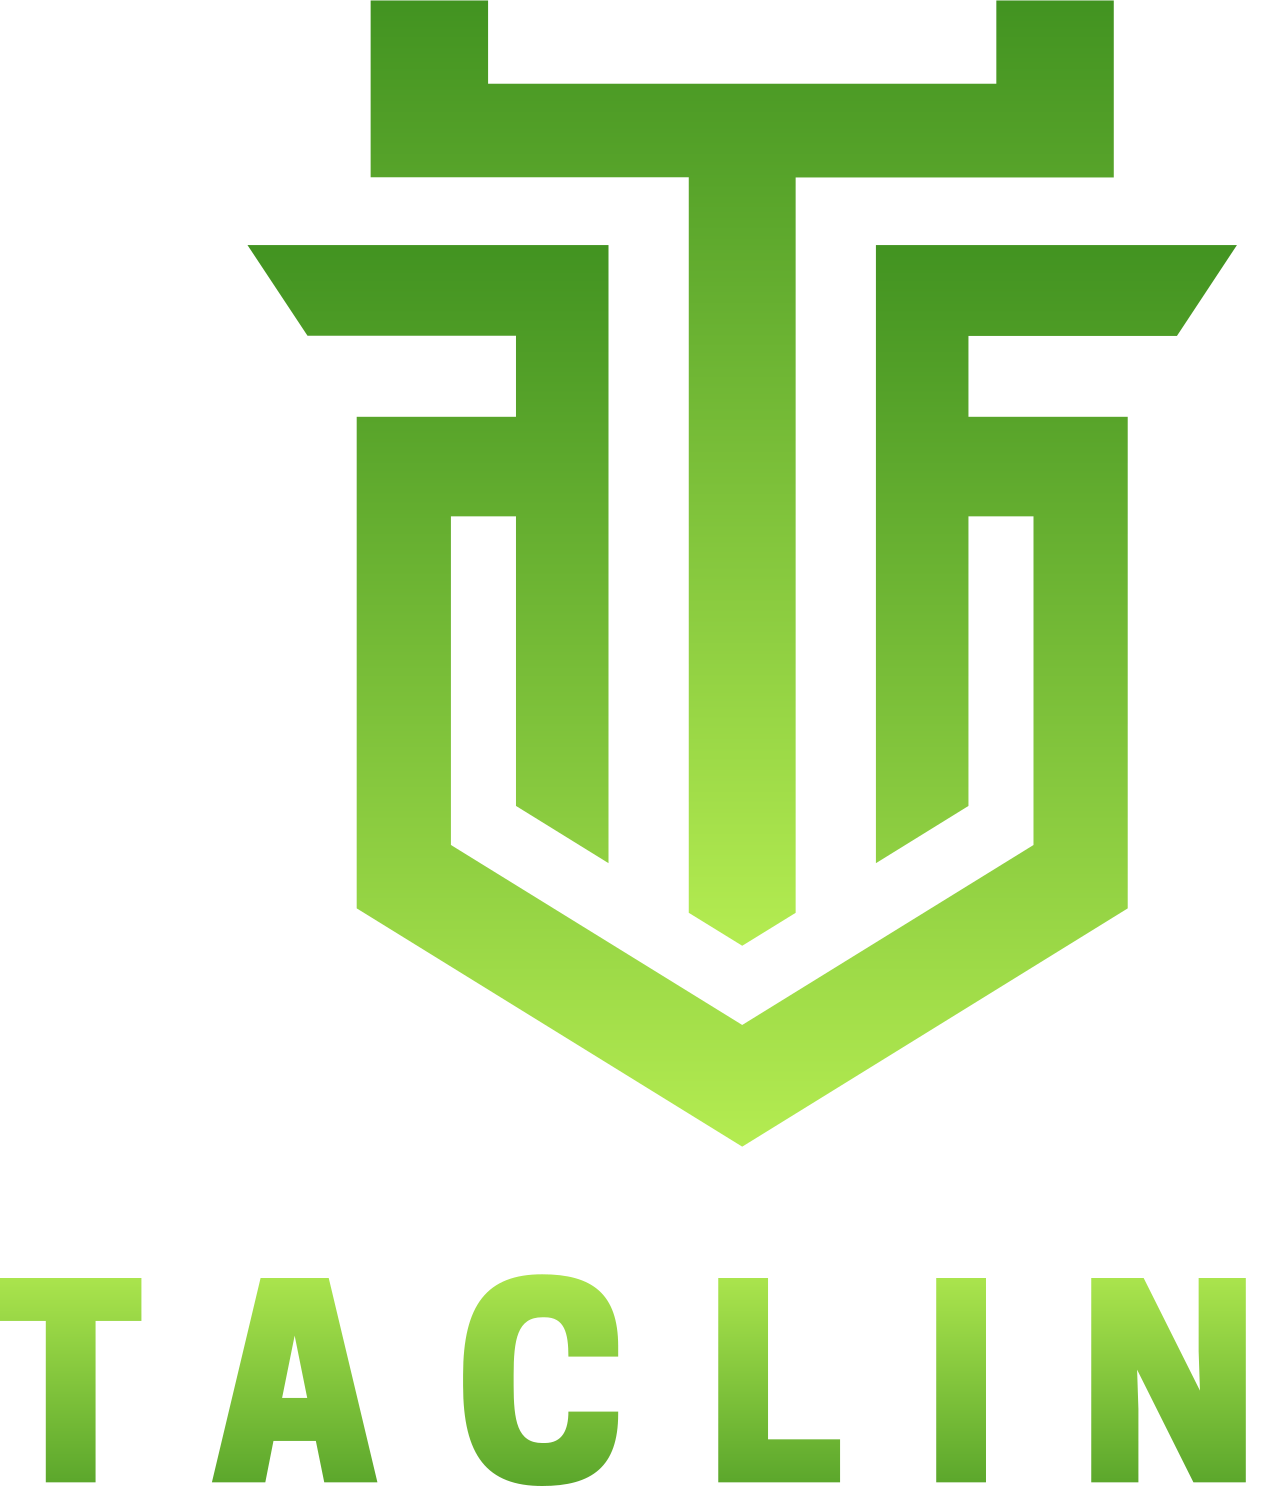 Tacline's logo